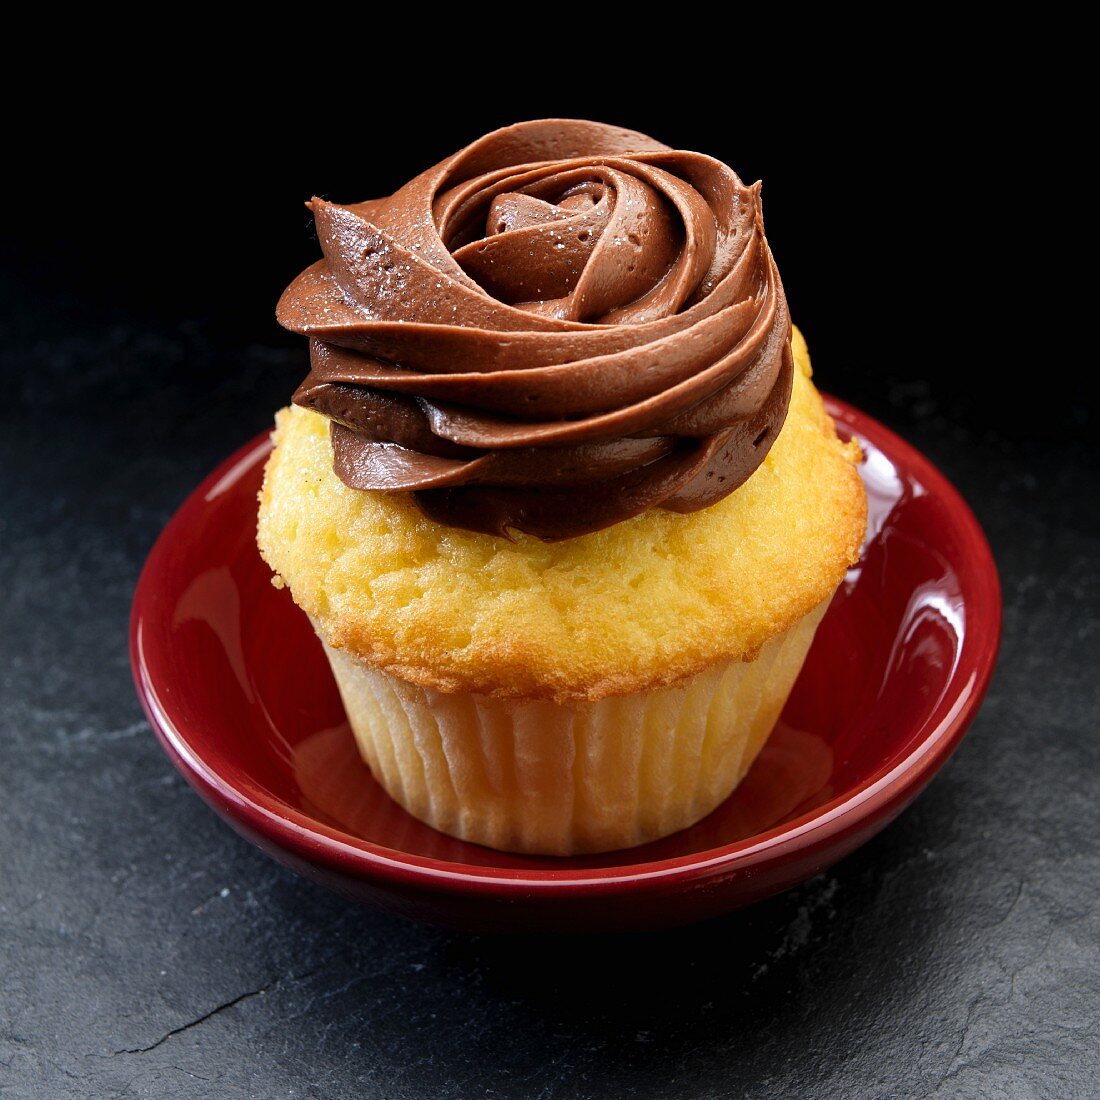 A cupcake with dark chocolate icing